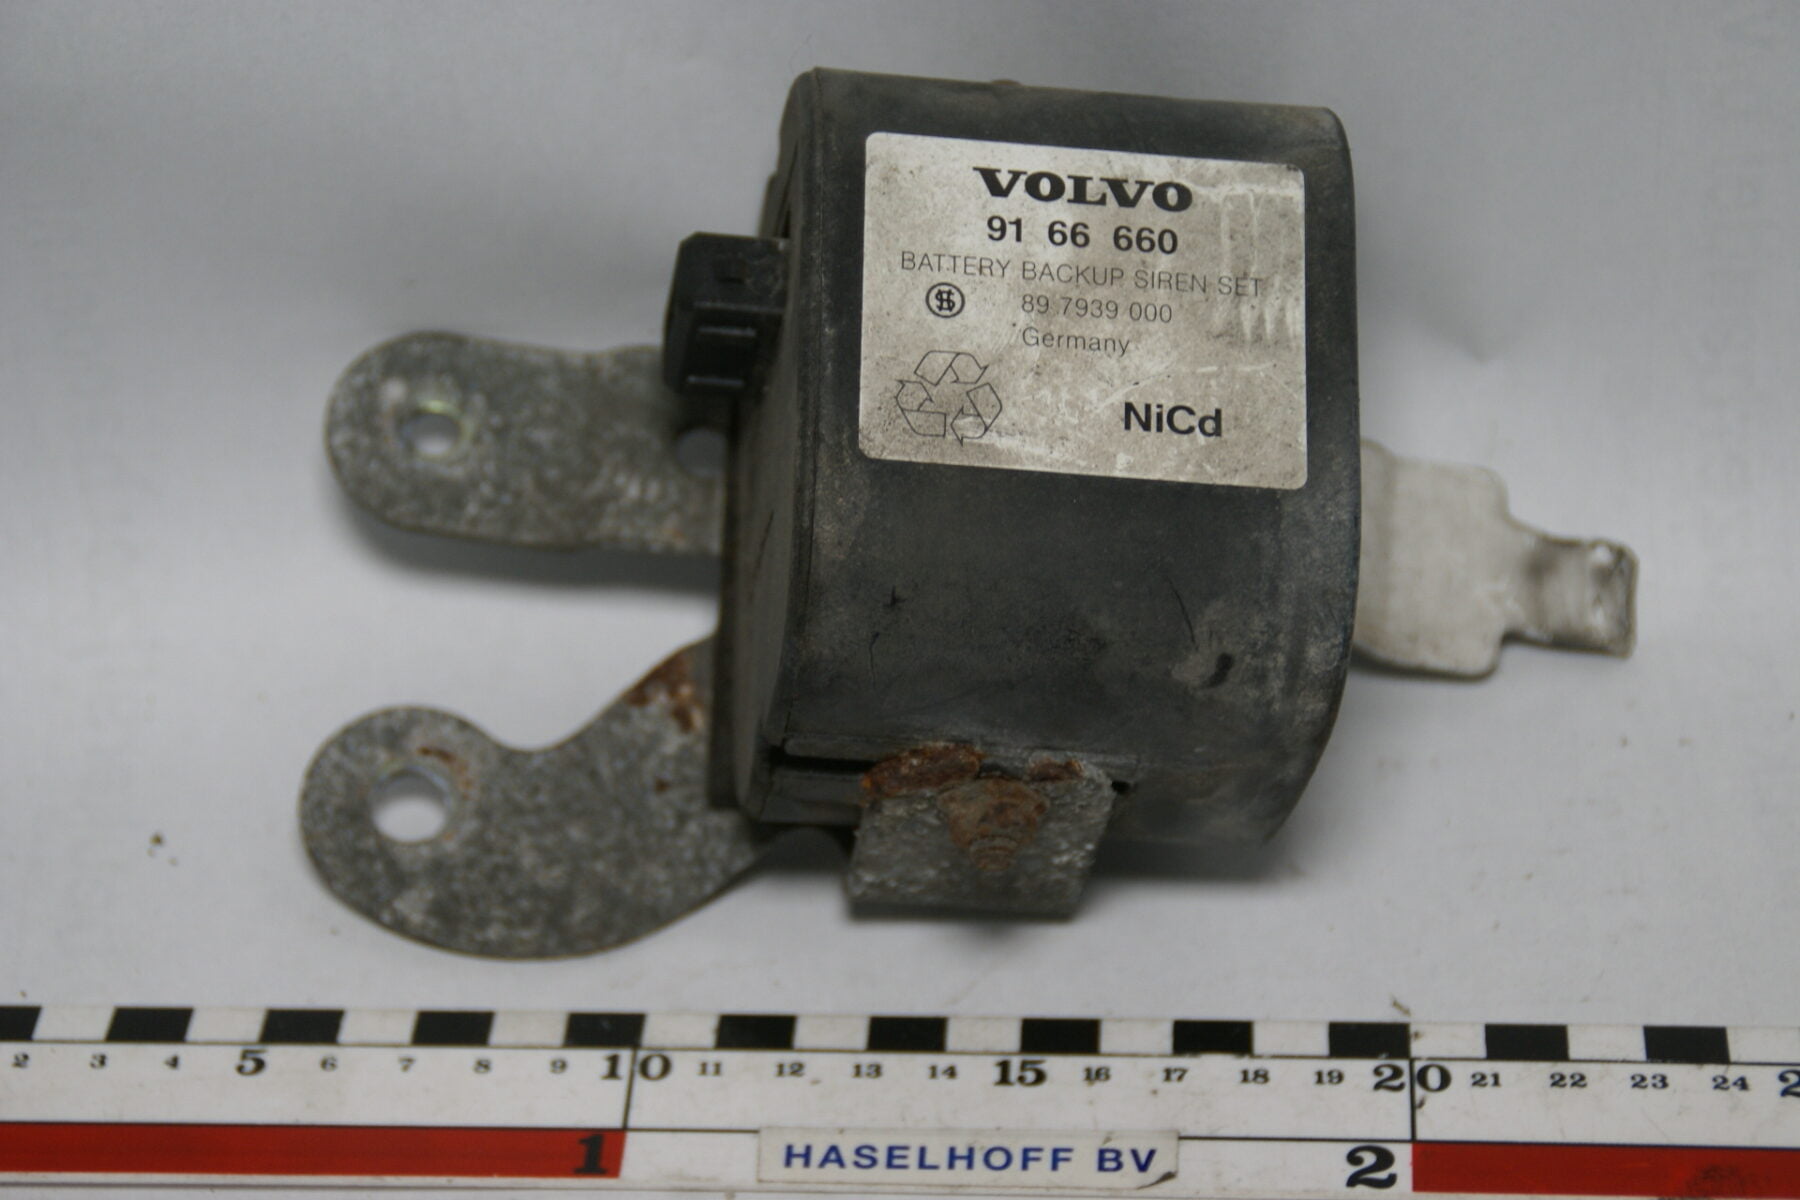 Volvo NiCd battery backup siren set 9166660-0